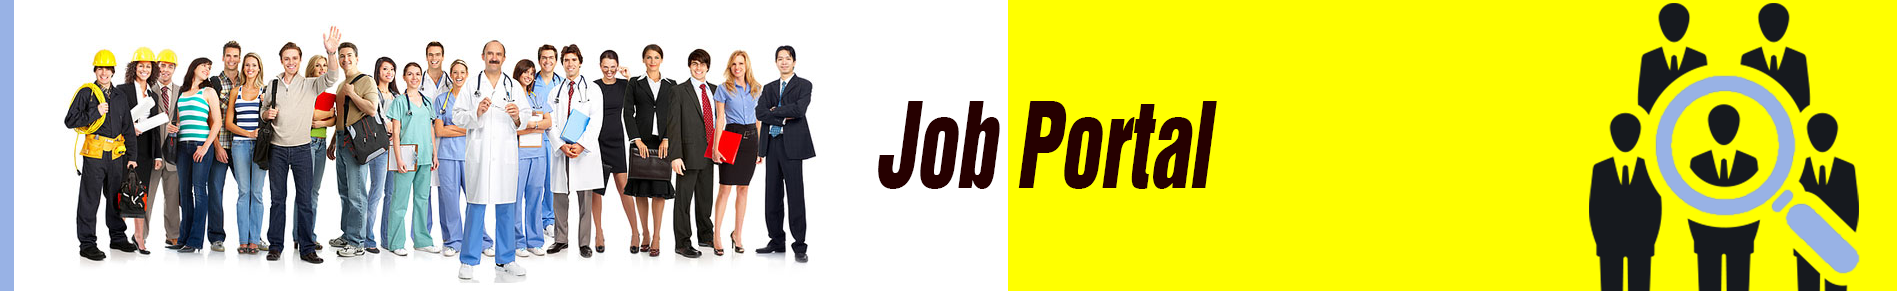 Job Portal Development in Chennai | Job Portal Website Development Company in Chennai | Job Portal Services in Chennai - cwd.co.in